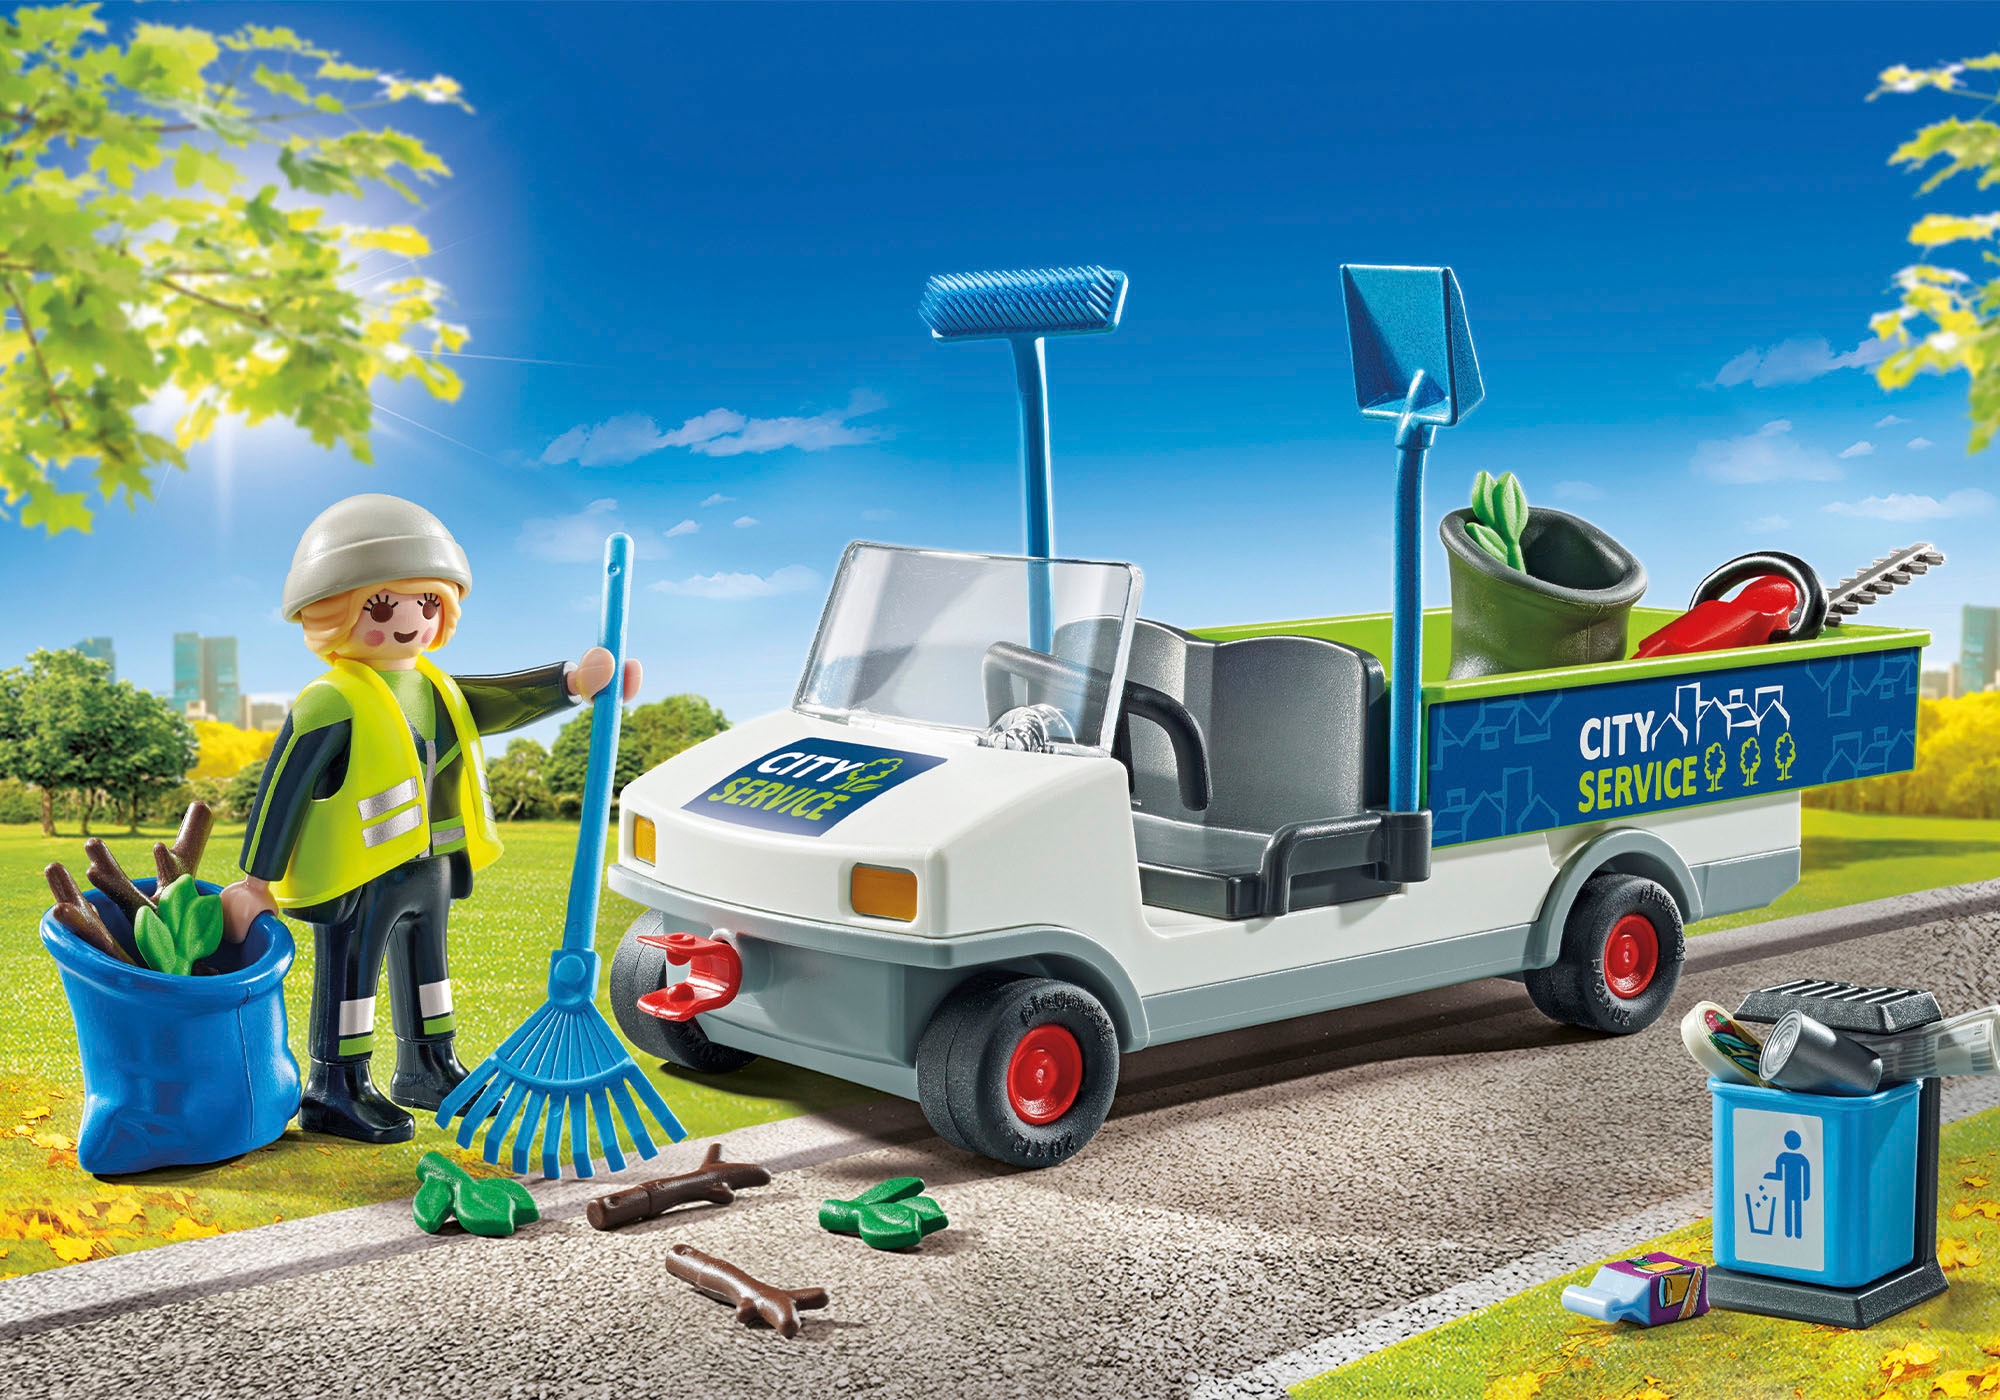 Playmobil® Konstruktions-Spielset »Stadtreinigung mit E-Fahrzeug (71433), City Action«, (42 St.)